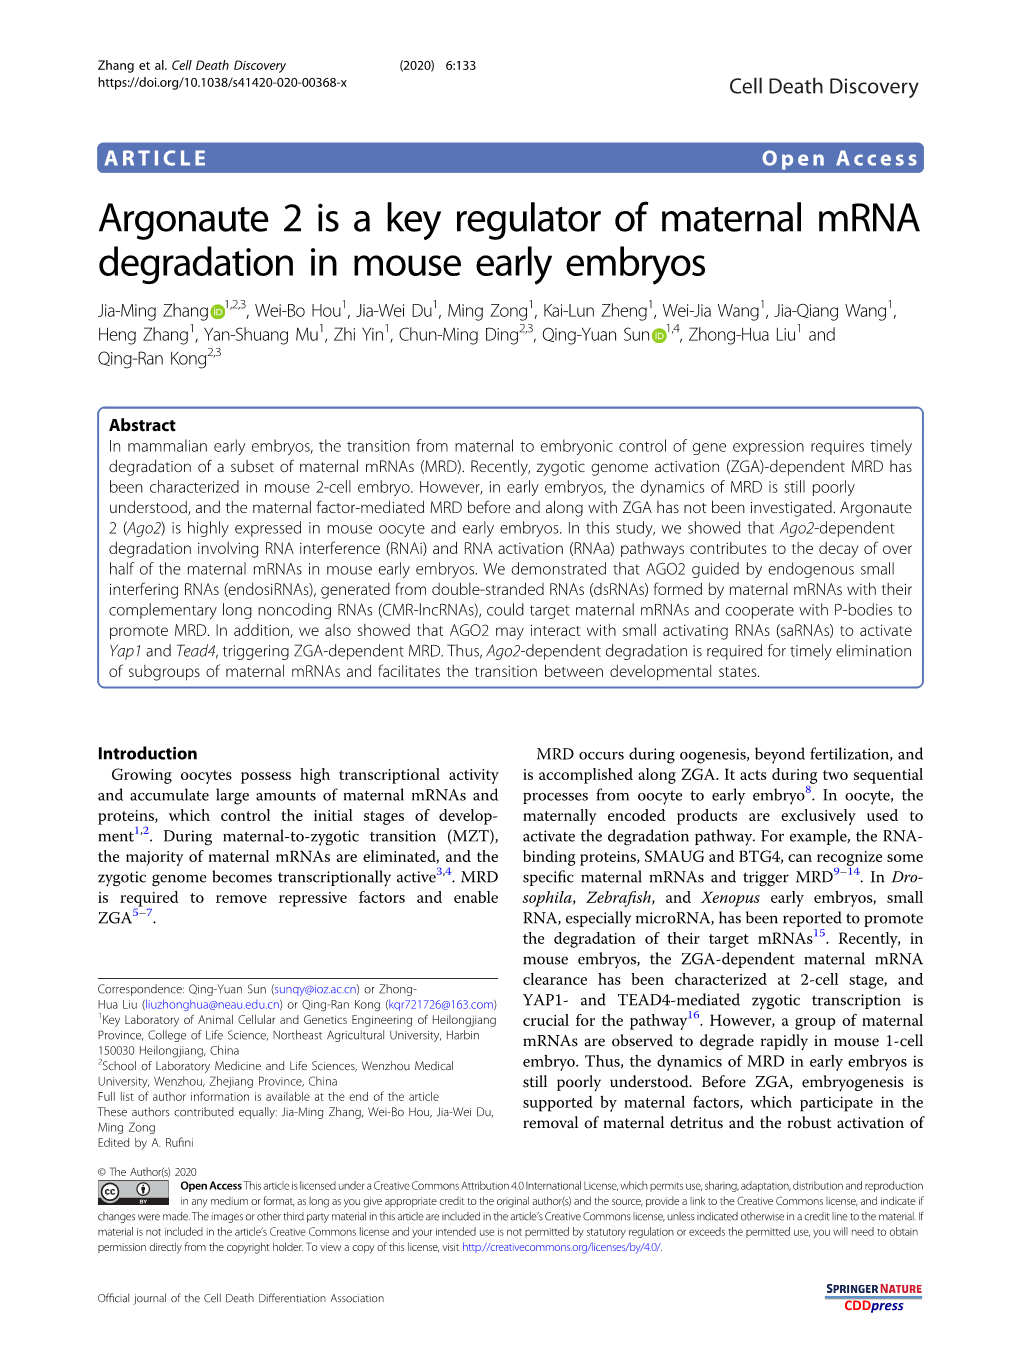 Argonaute 2 Is a Key Regulator of Maternal Mrna Degradation In